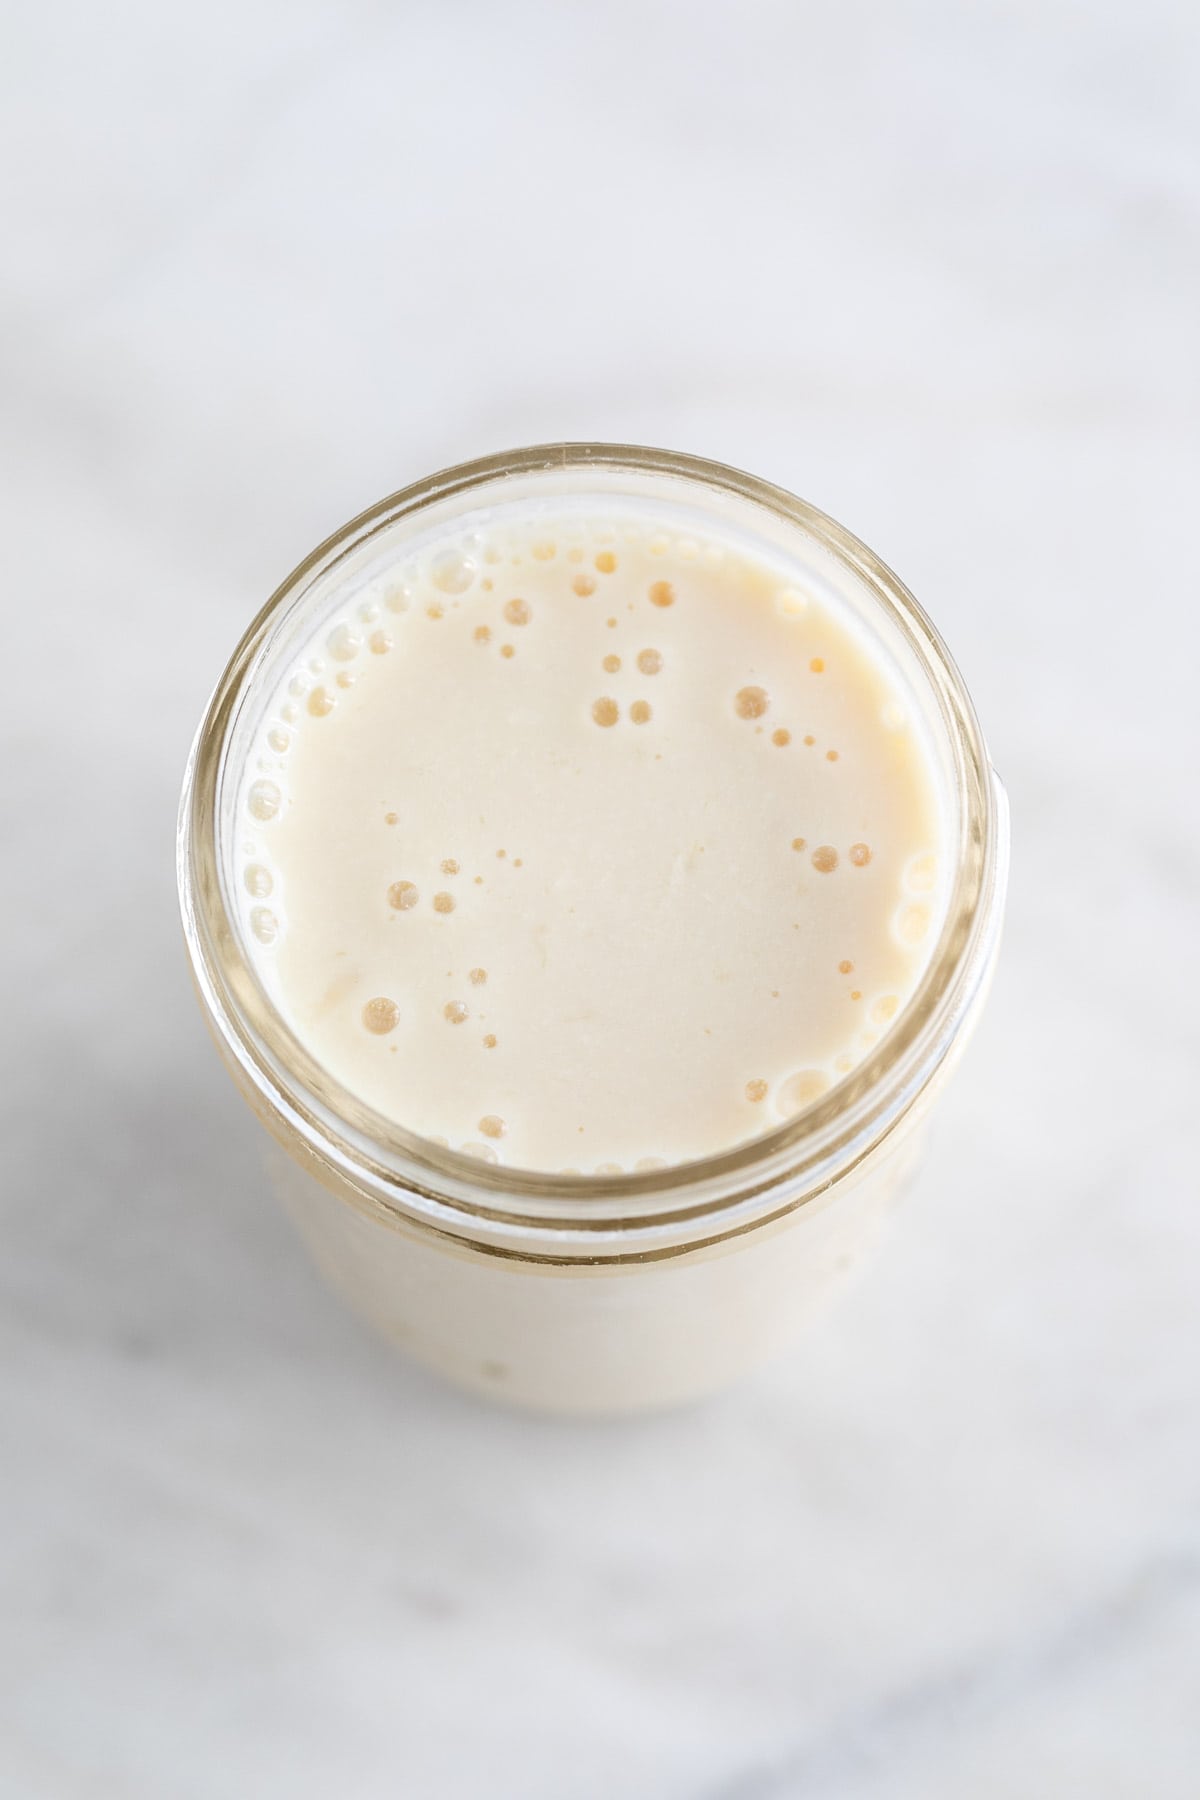 Vegan buttermilk in glass jar.